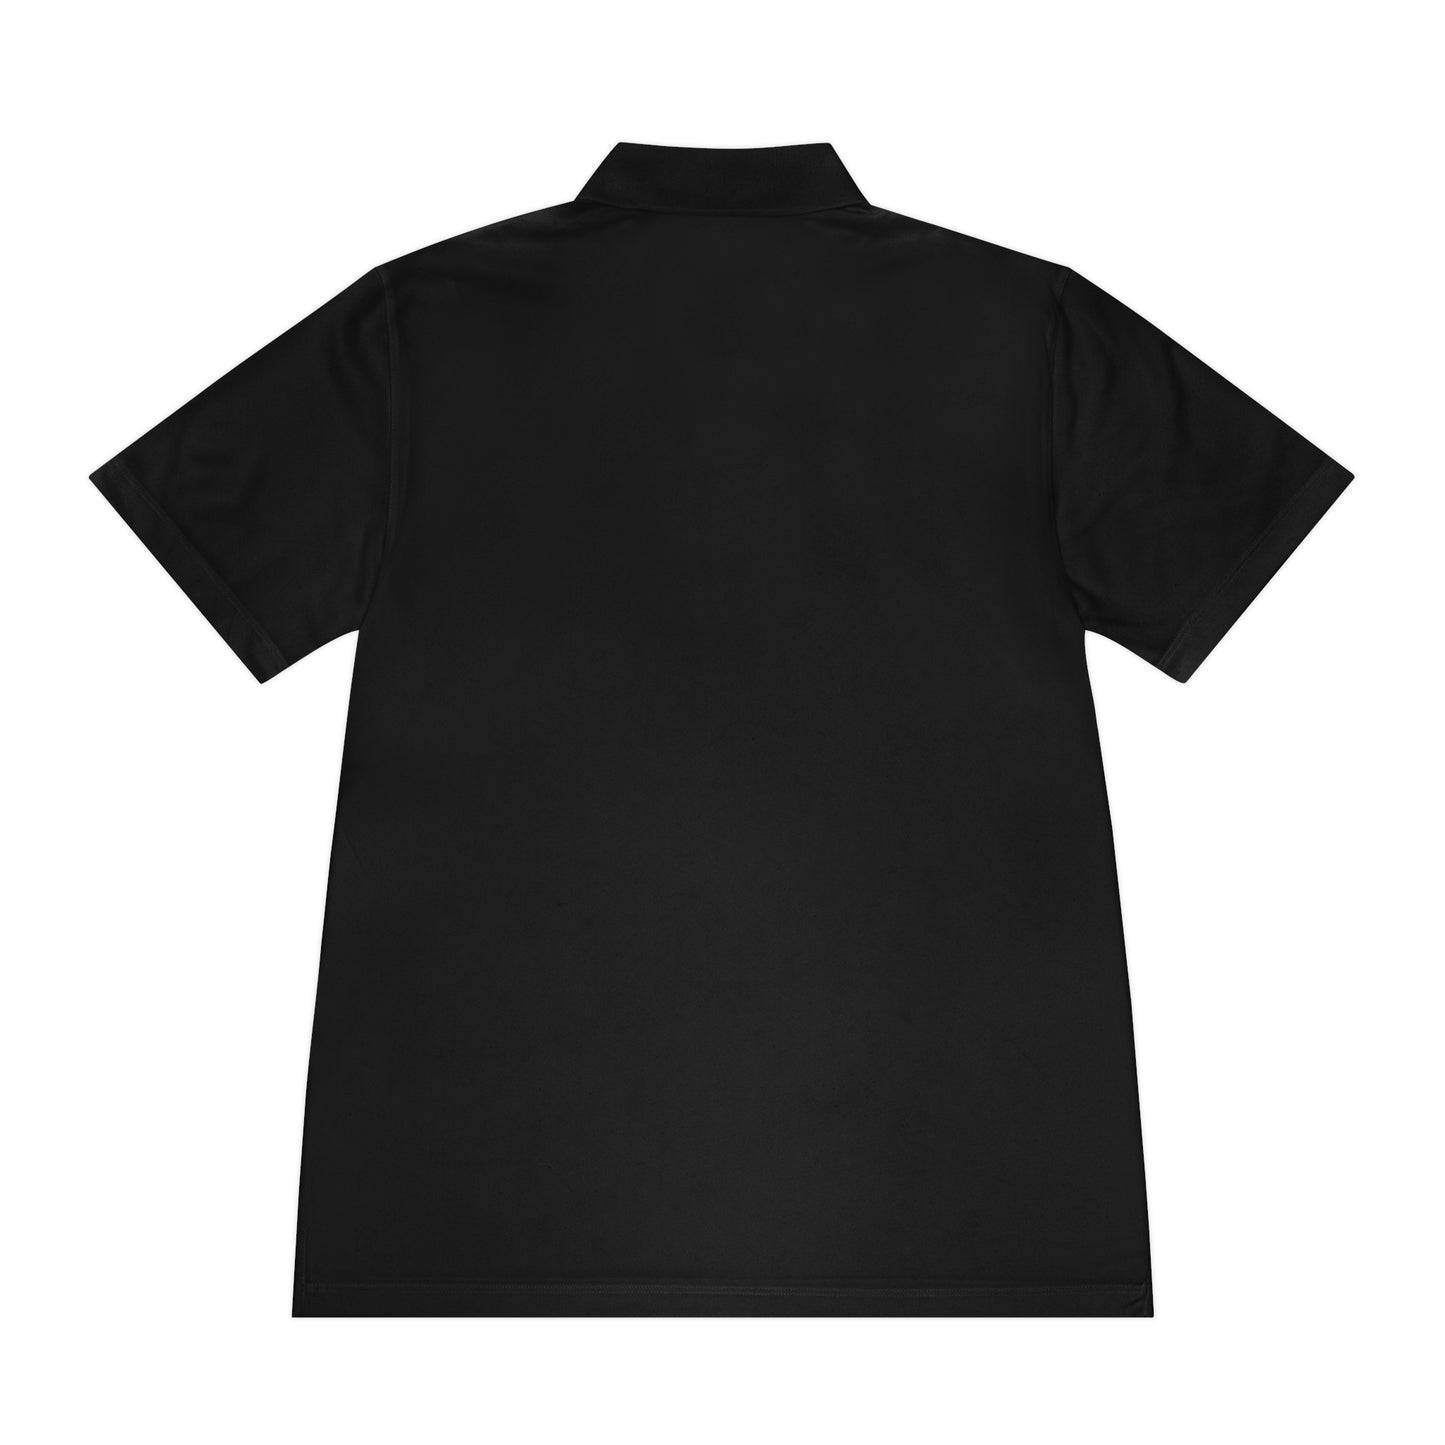 Black Polo T-shirt • შავი პოლო მაისური